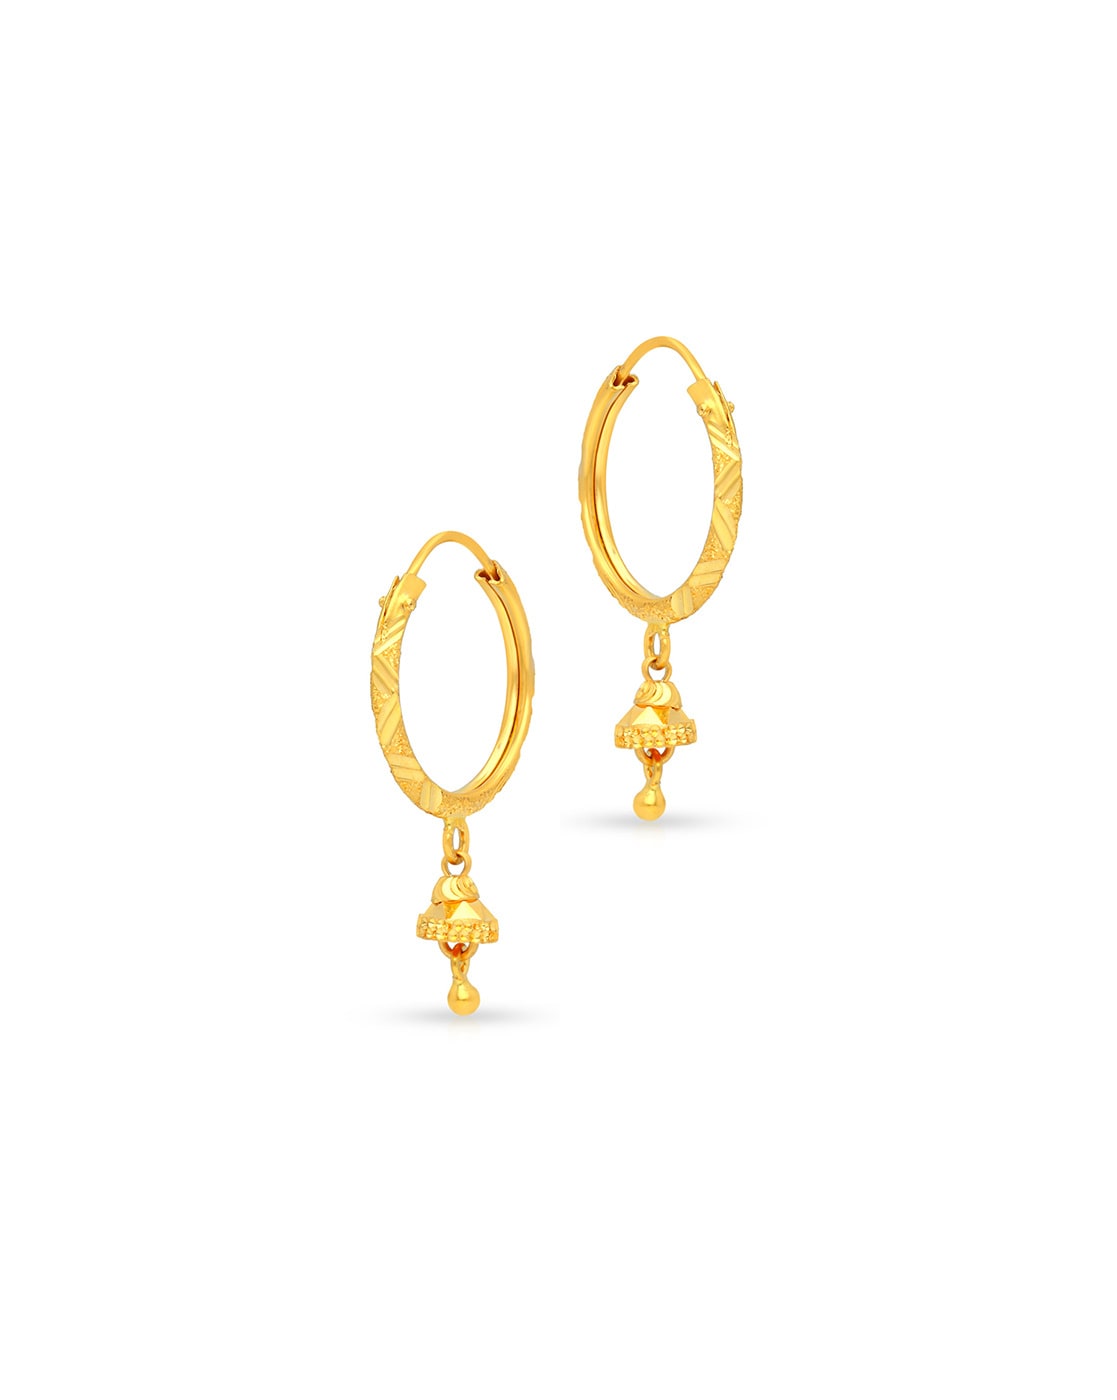 Buy 18kt Gold Earrings Hoop Earrings Handmade Gold Jewelry Infant Earrings  Piercing Online in India - Etsy